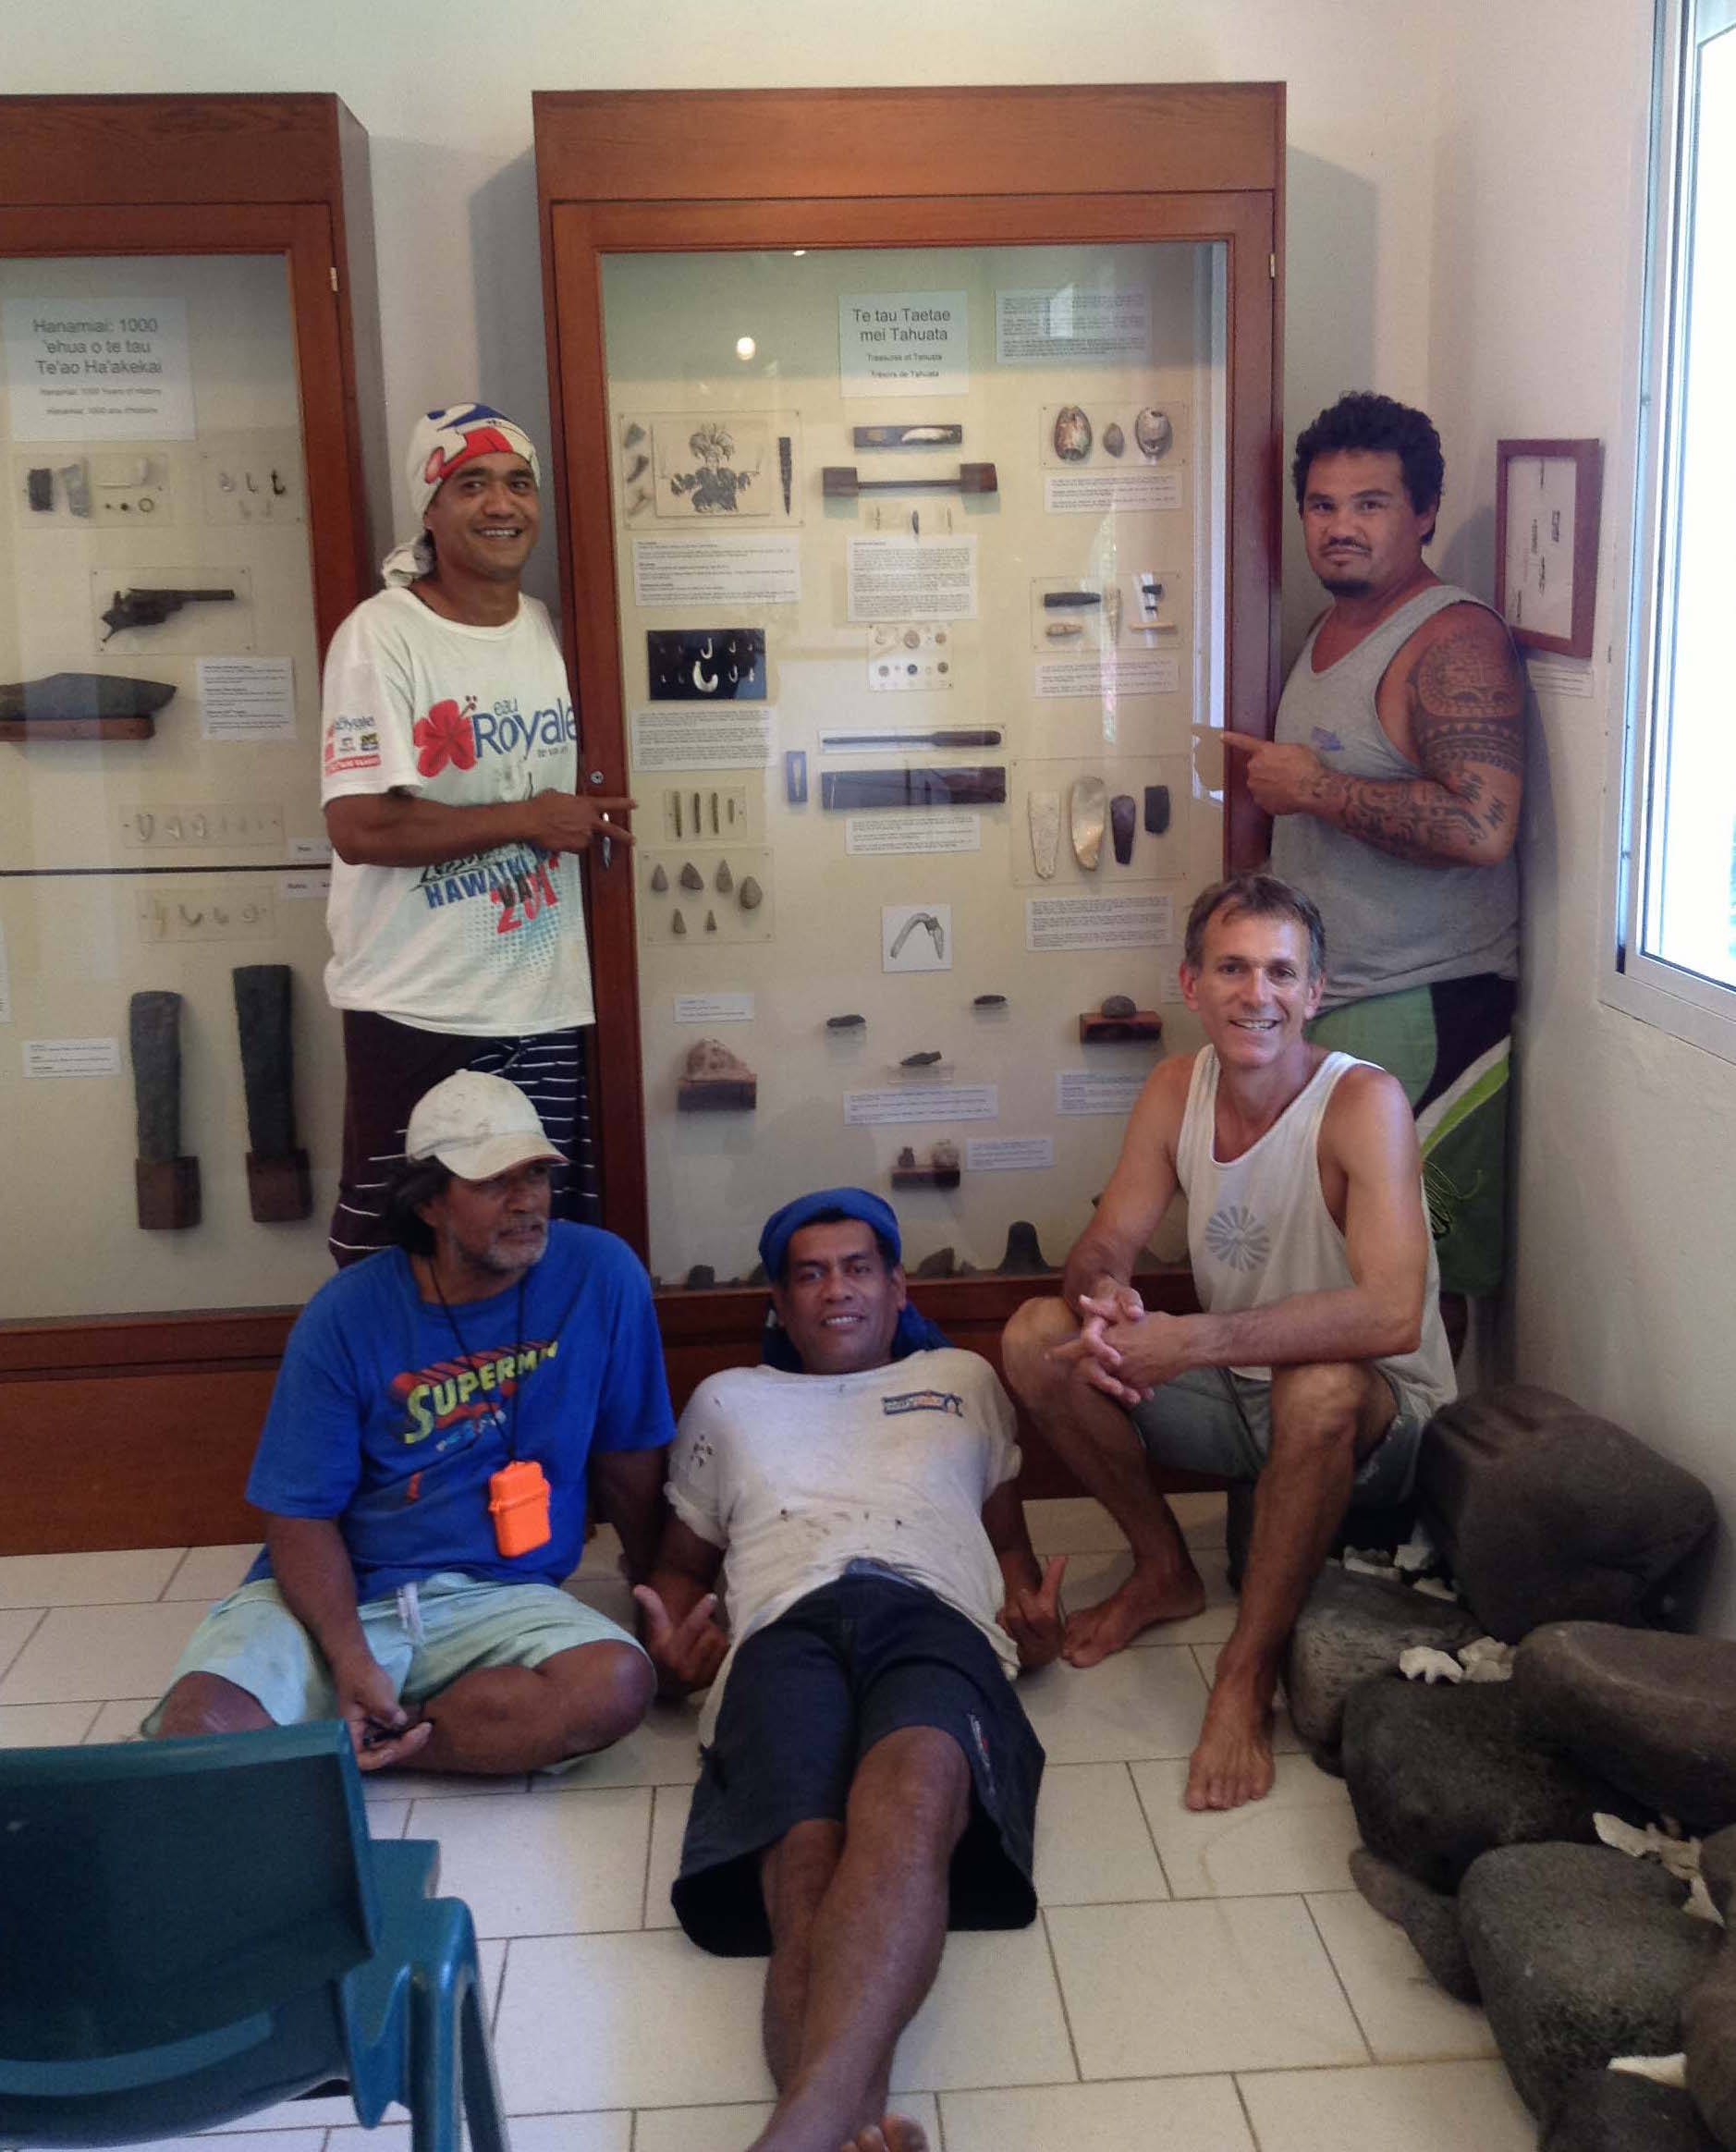 2013. Samuel Tiaiho, Manuhi Timau, Hio Timau, Barry Rolett and Joseph Barsinas with the completed "Treasures of Tahuata" exhibit.   (Copy)